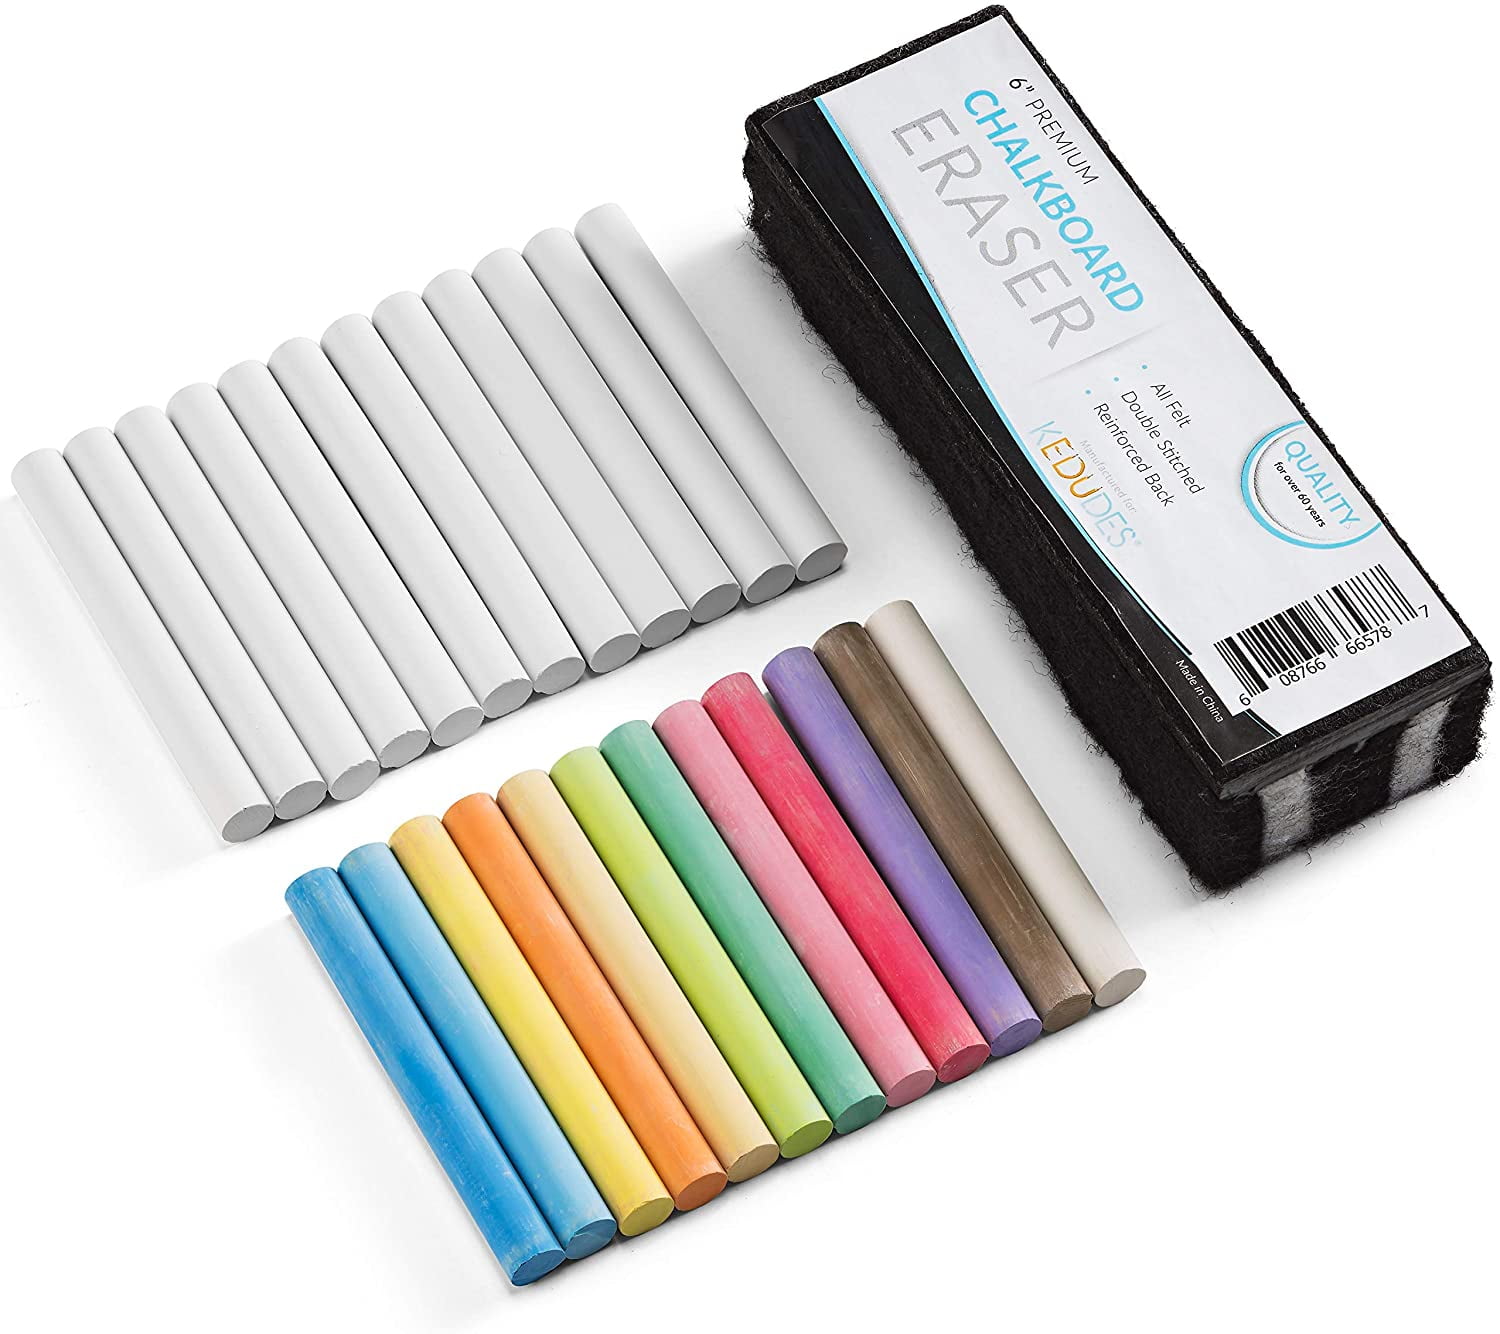 NotingBuss-Home Mouse Shaped Chalk Eraser Whiteboard Chalk Eraser Chalkboard School Supplies Blue,Red Educational Supplies 